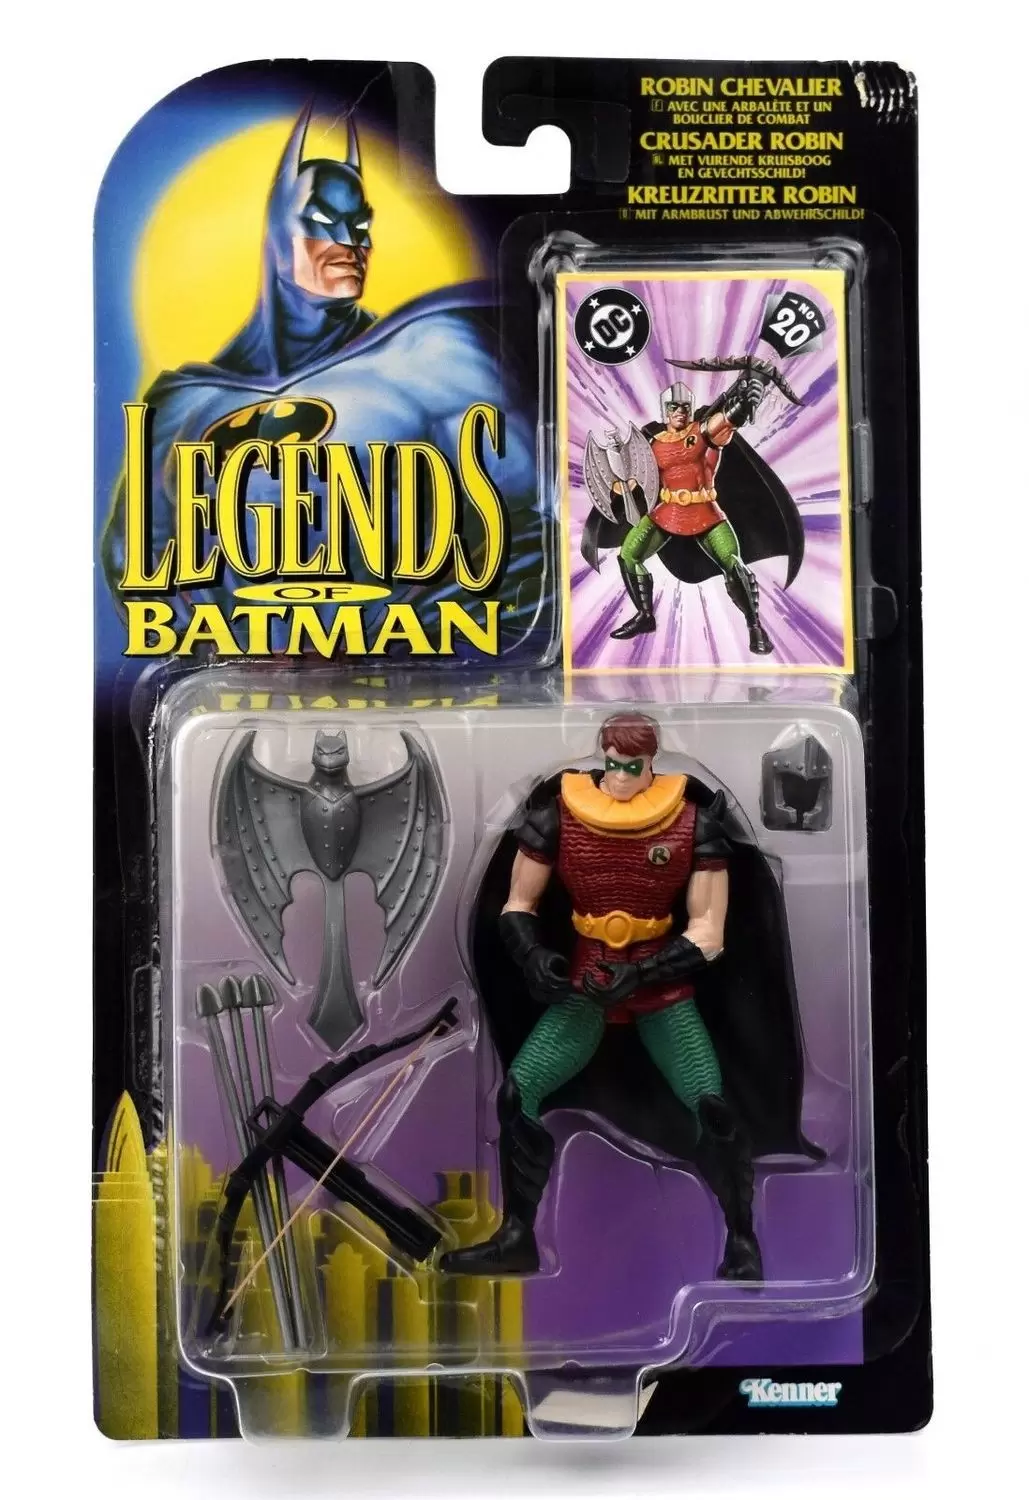 Legends of the Batman - Crusader Robin